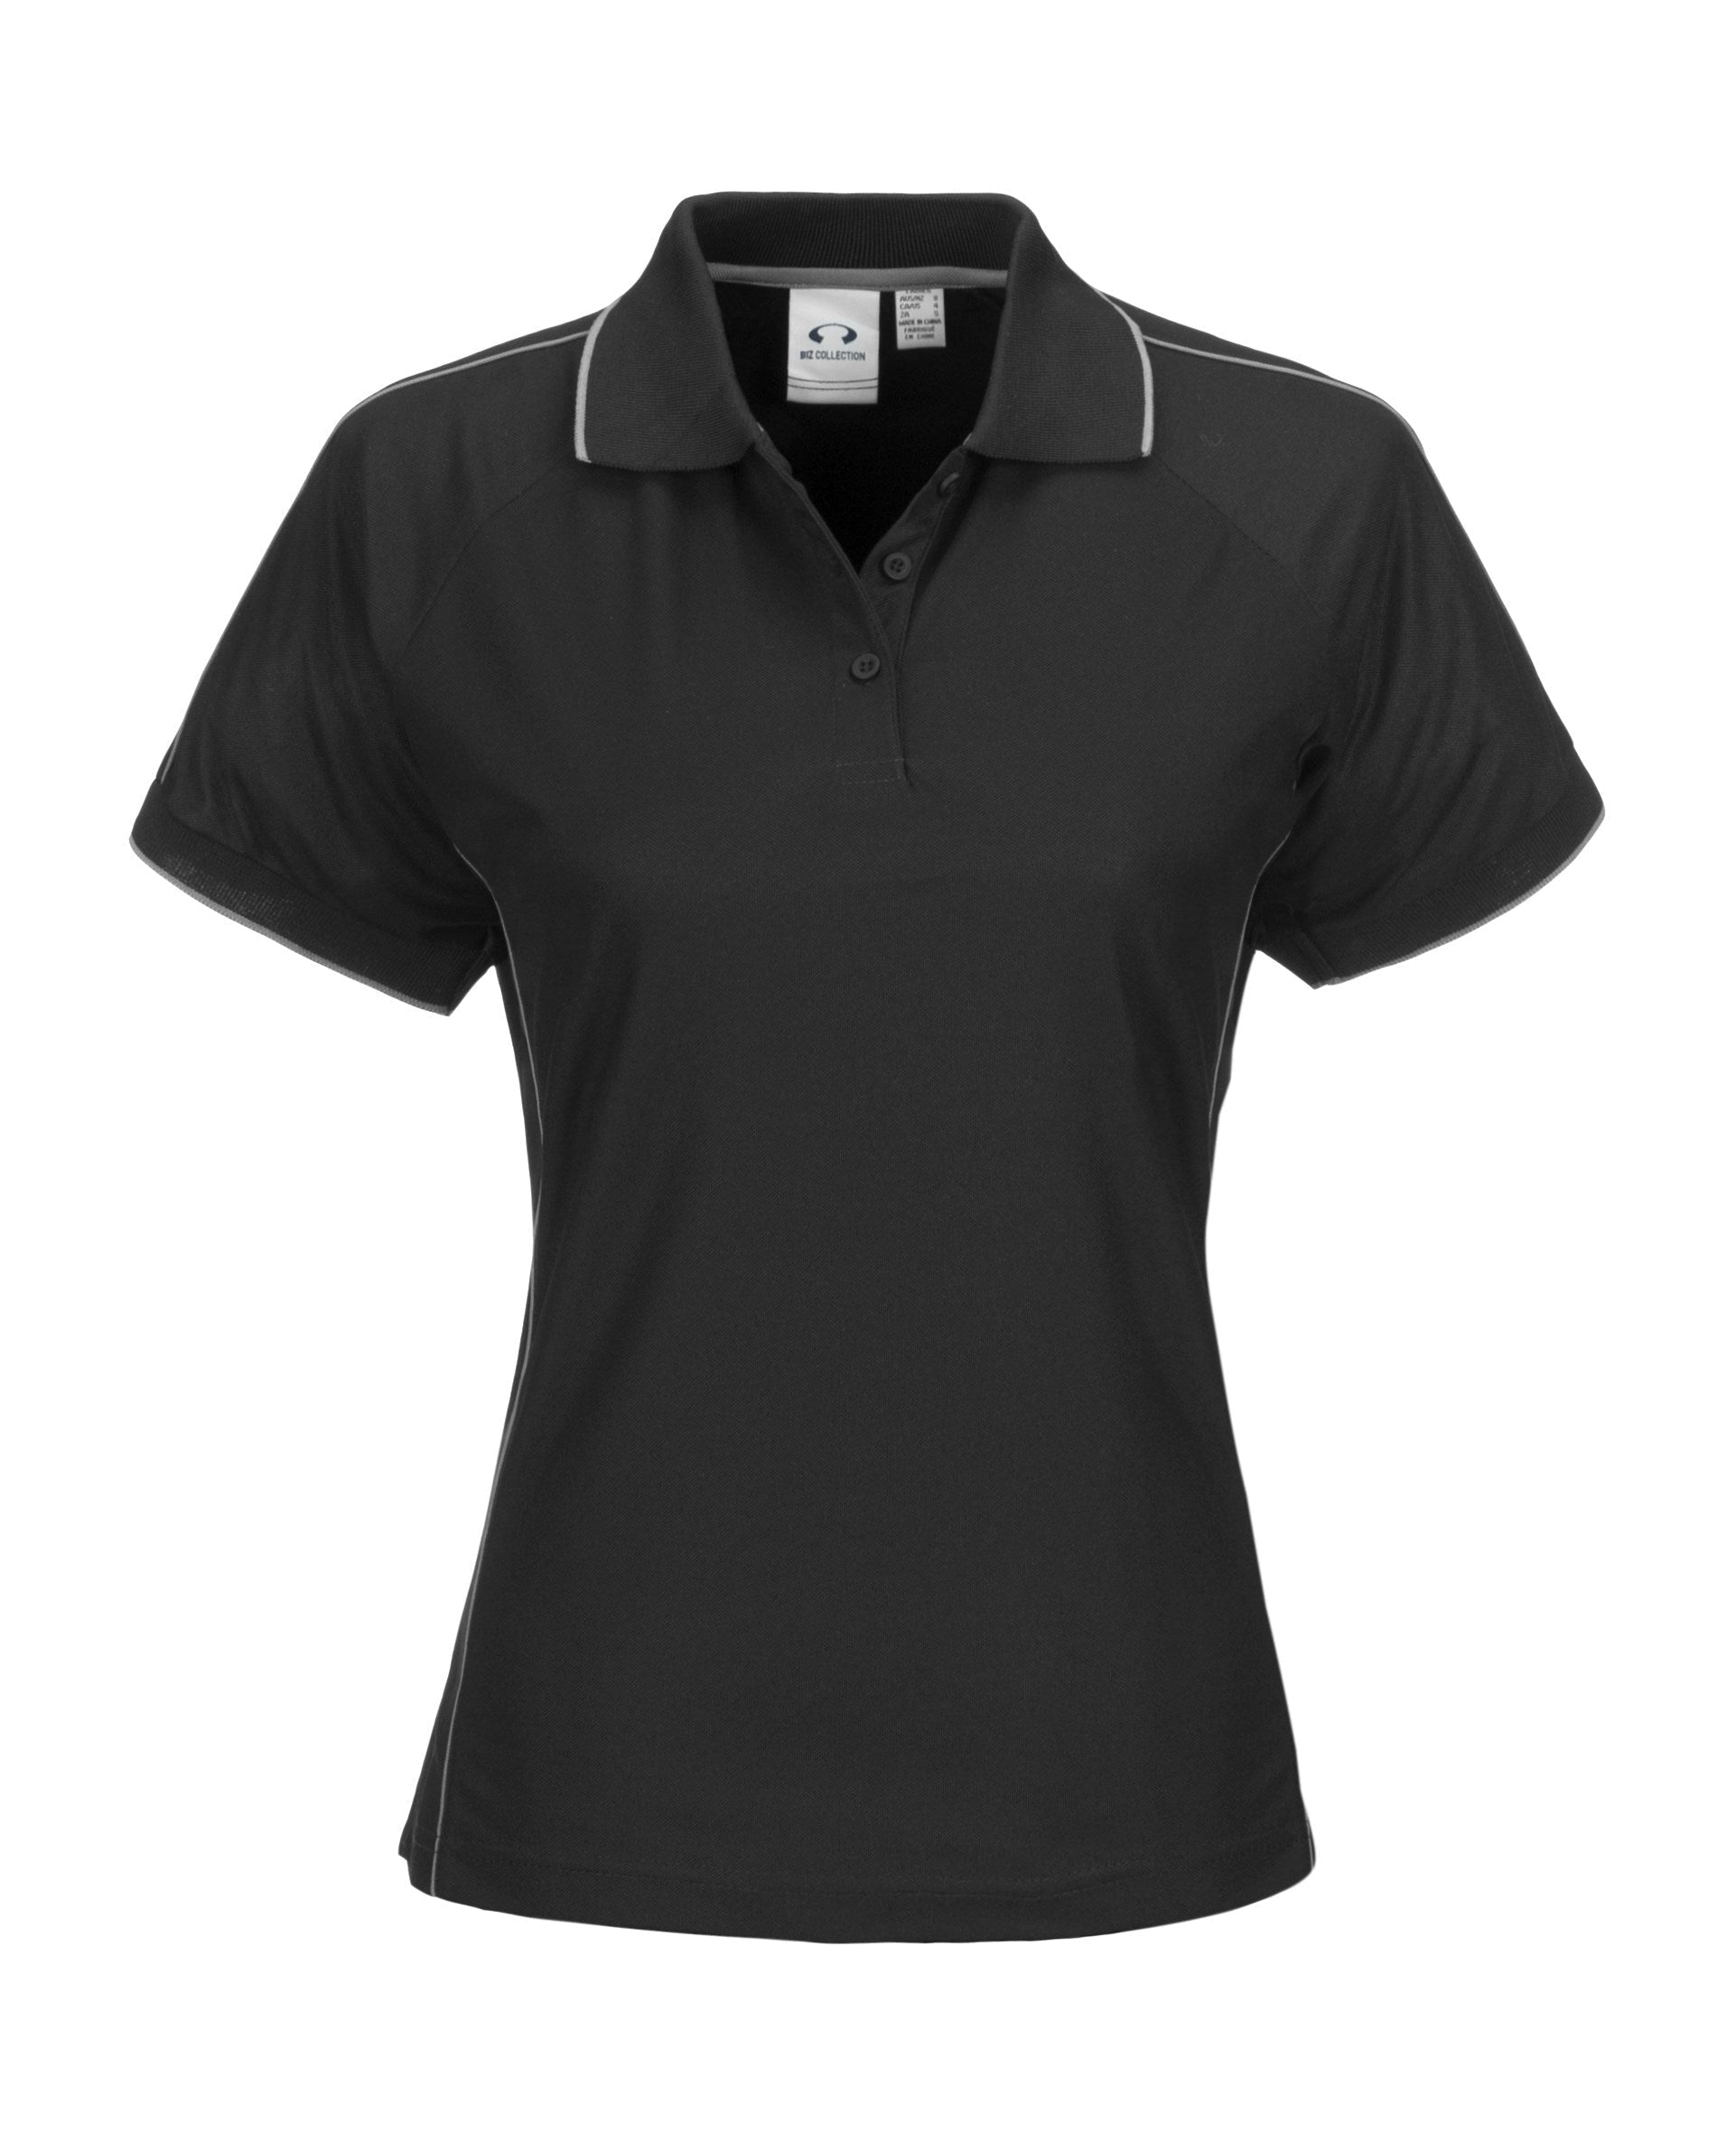 Ladies Resort Golf Shirt - White Only-L-Black-BL